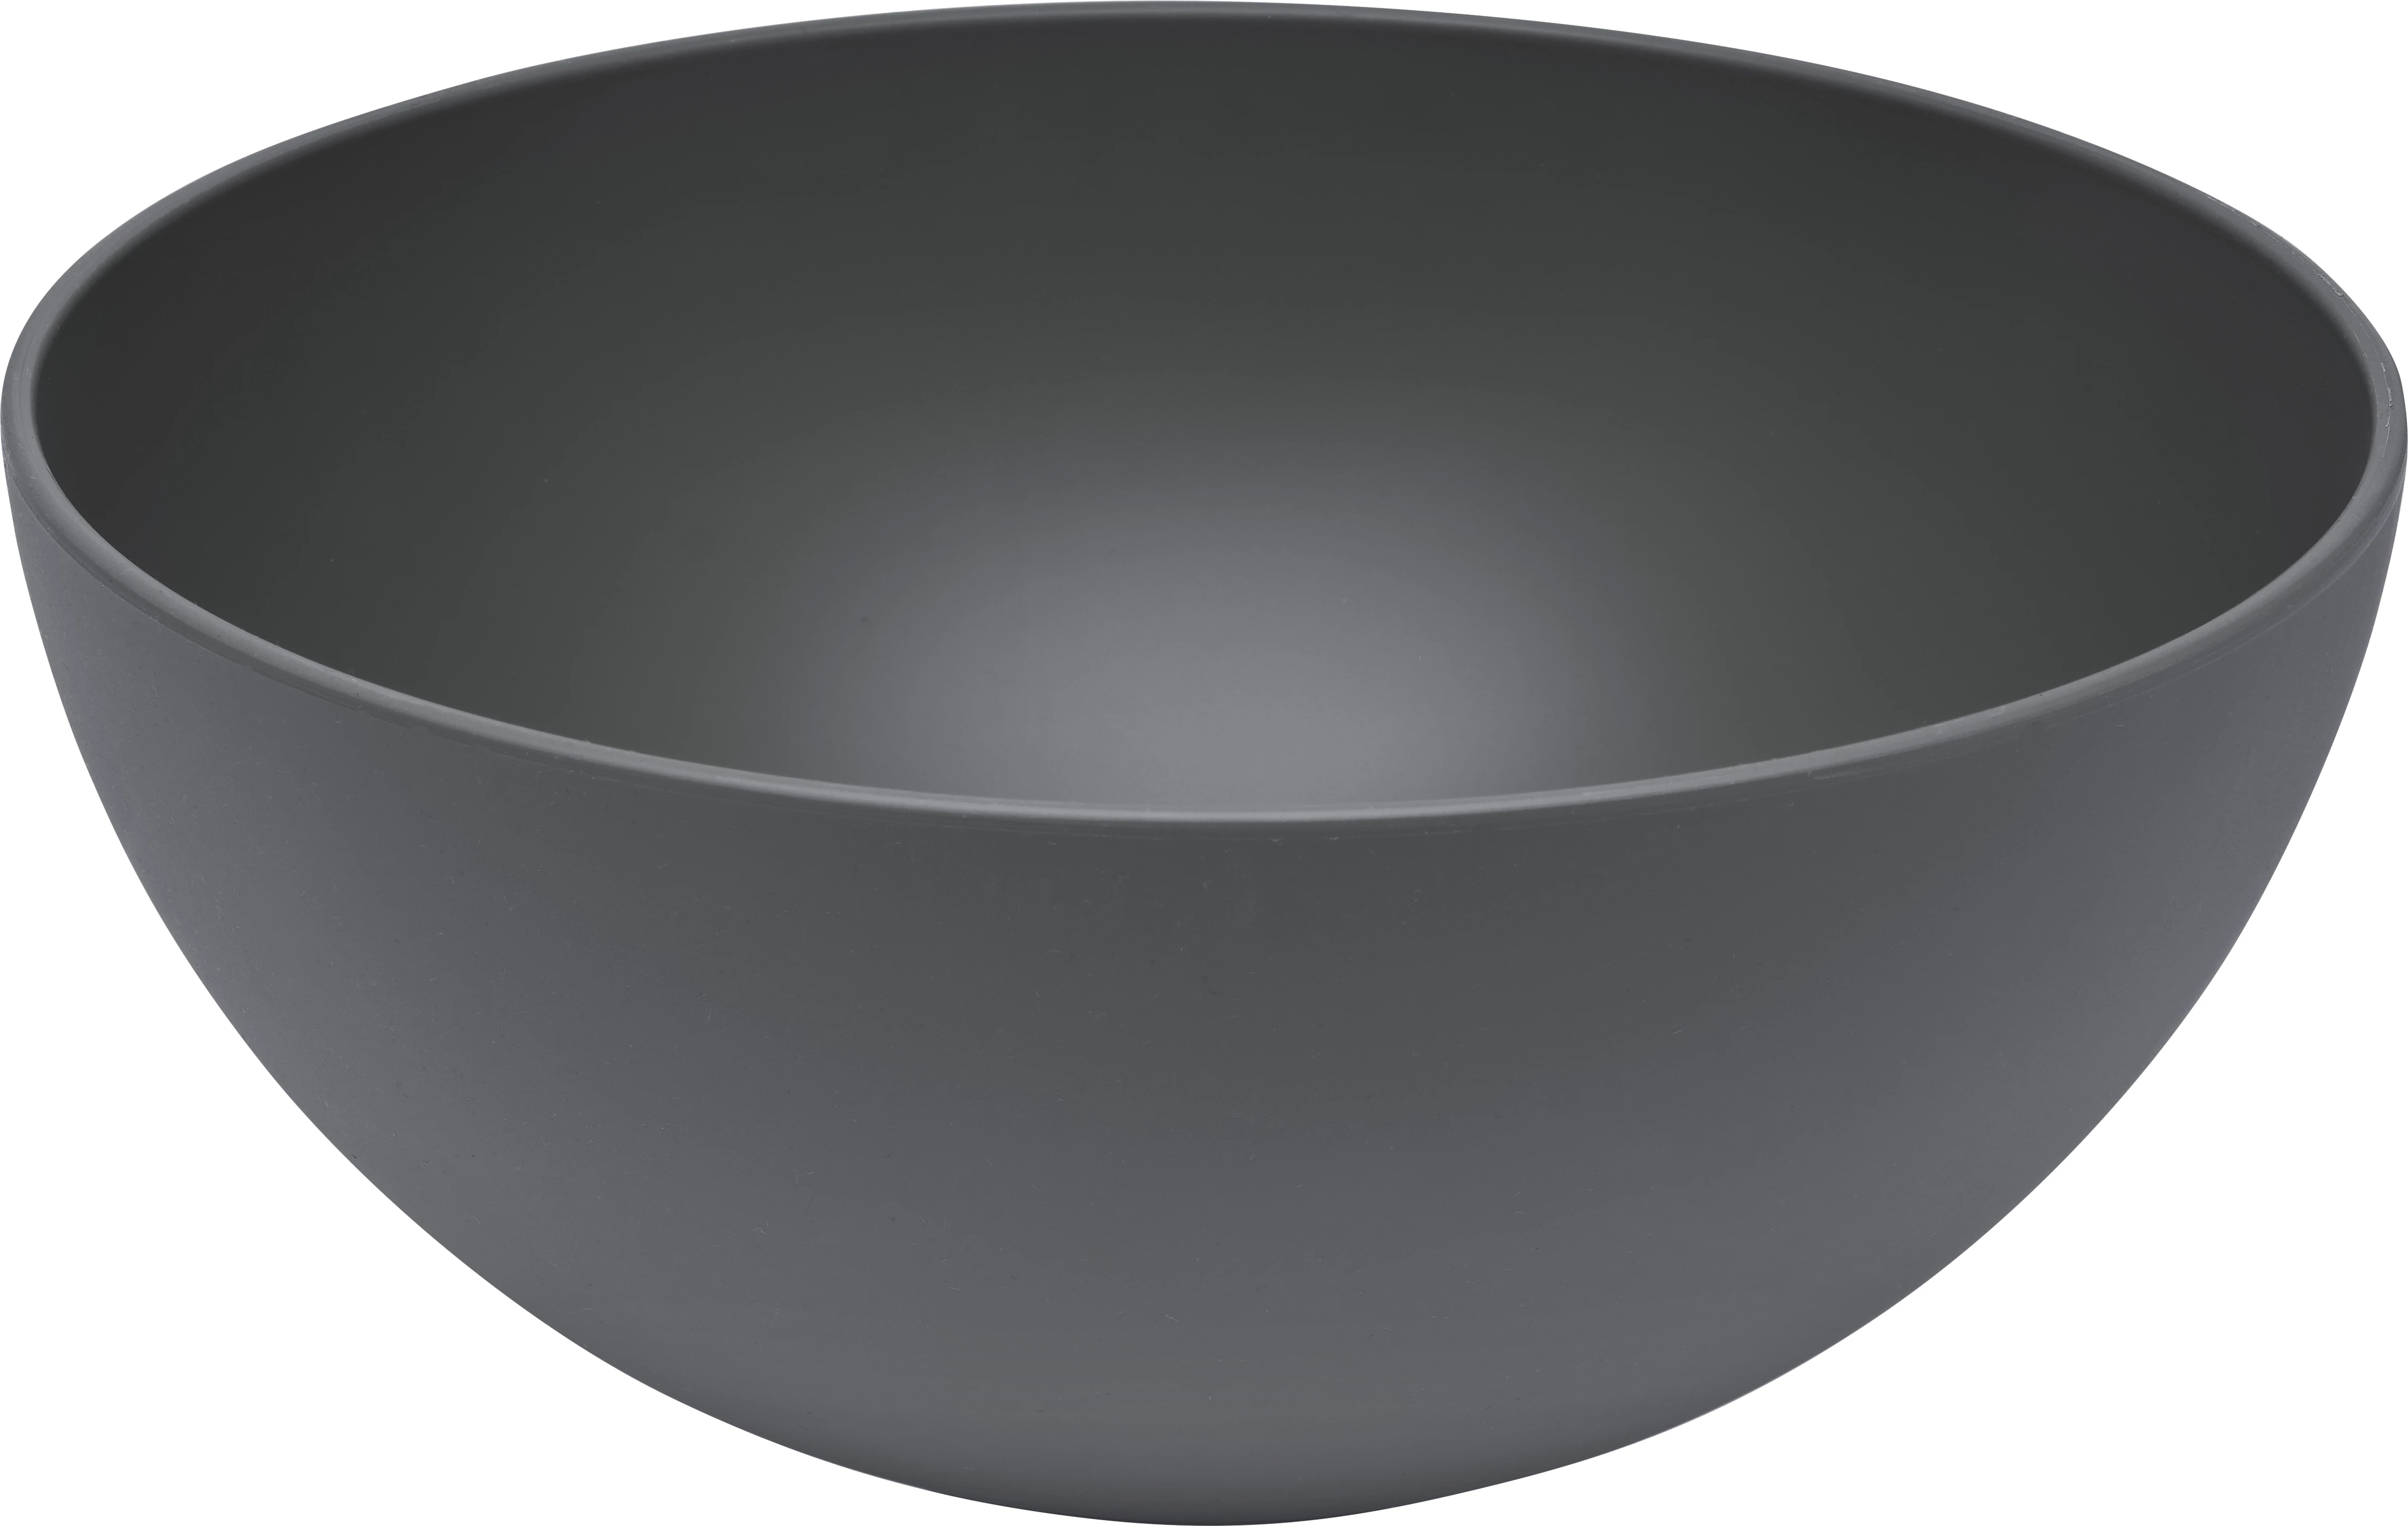 Magu skål, mørkegrå, 400 cl, ø26 cm